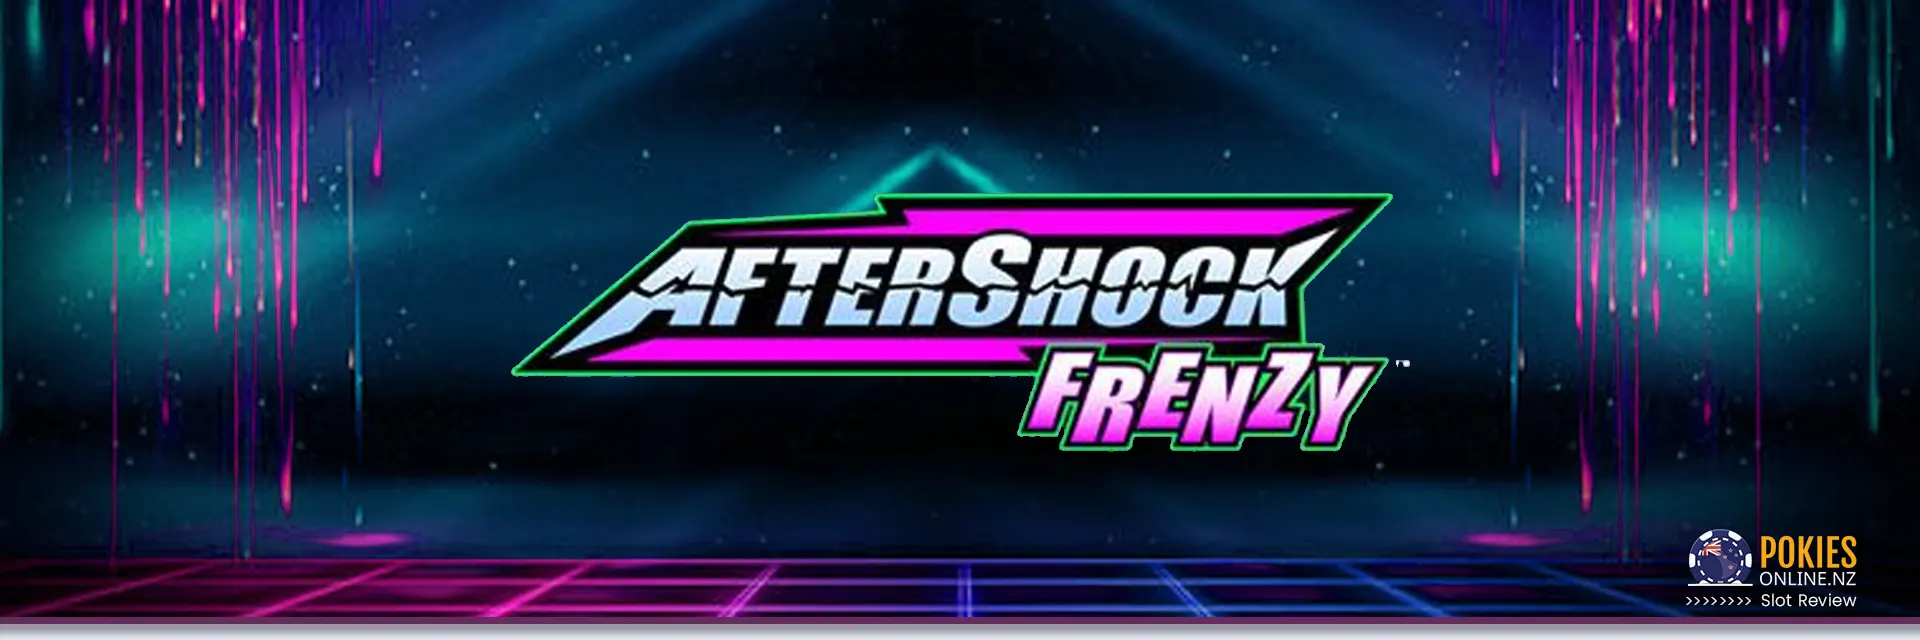 Aftershock frenzy slot banner